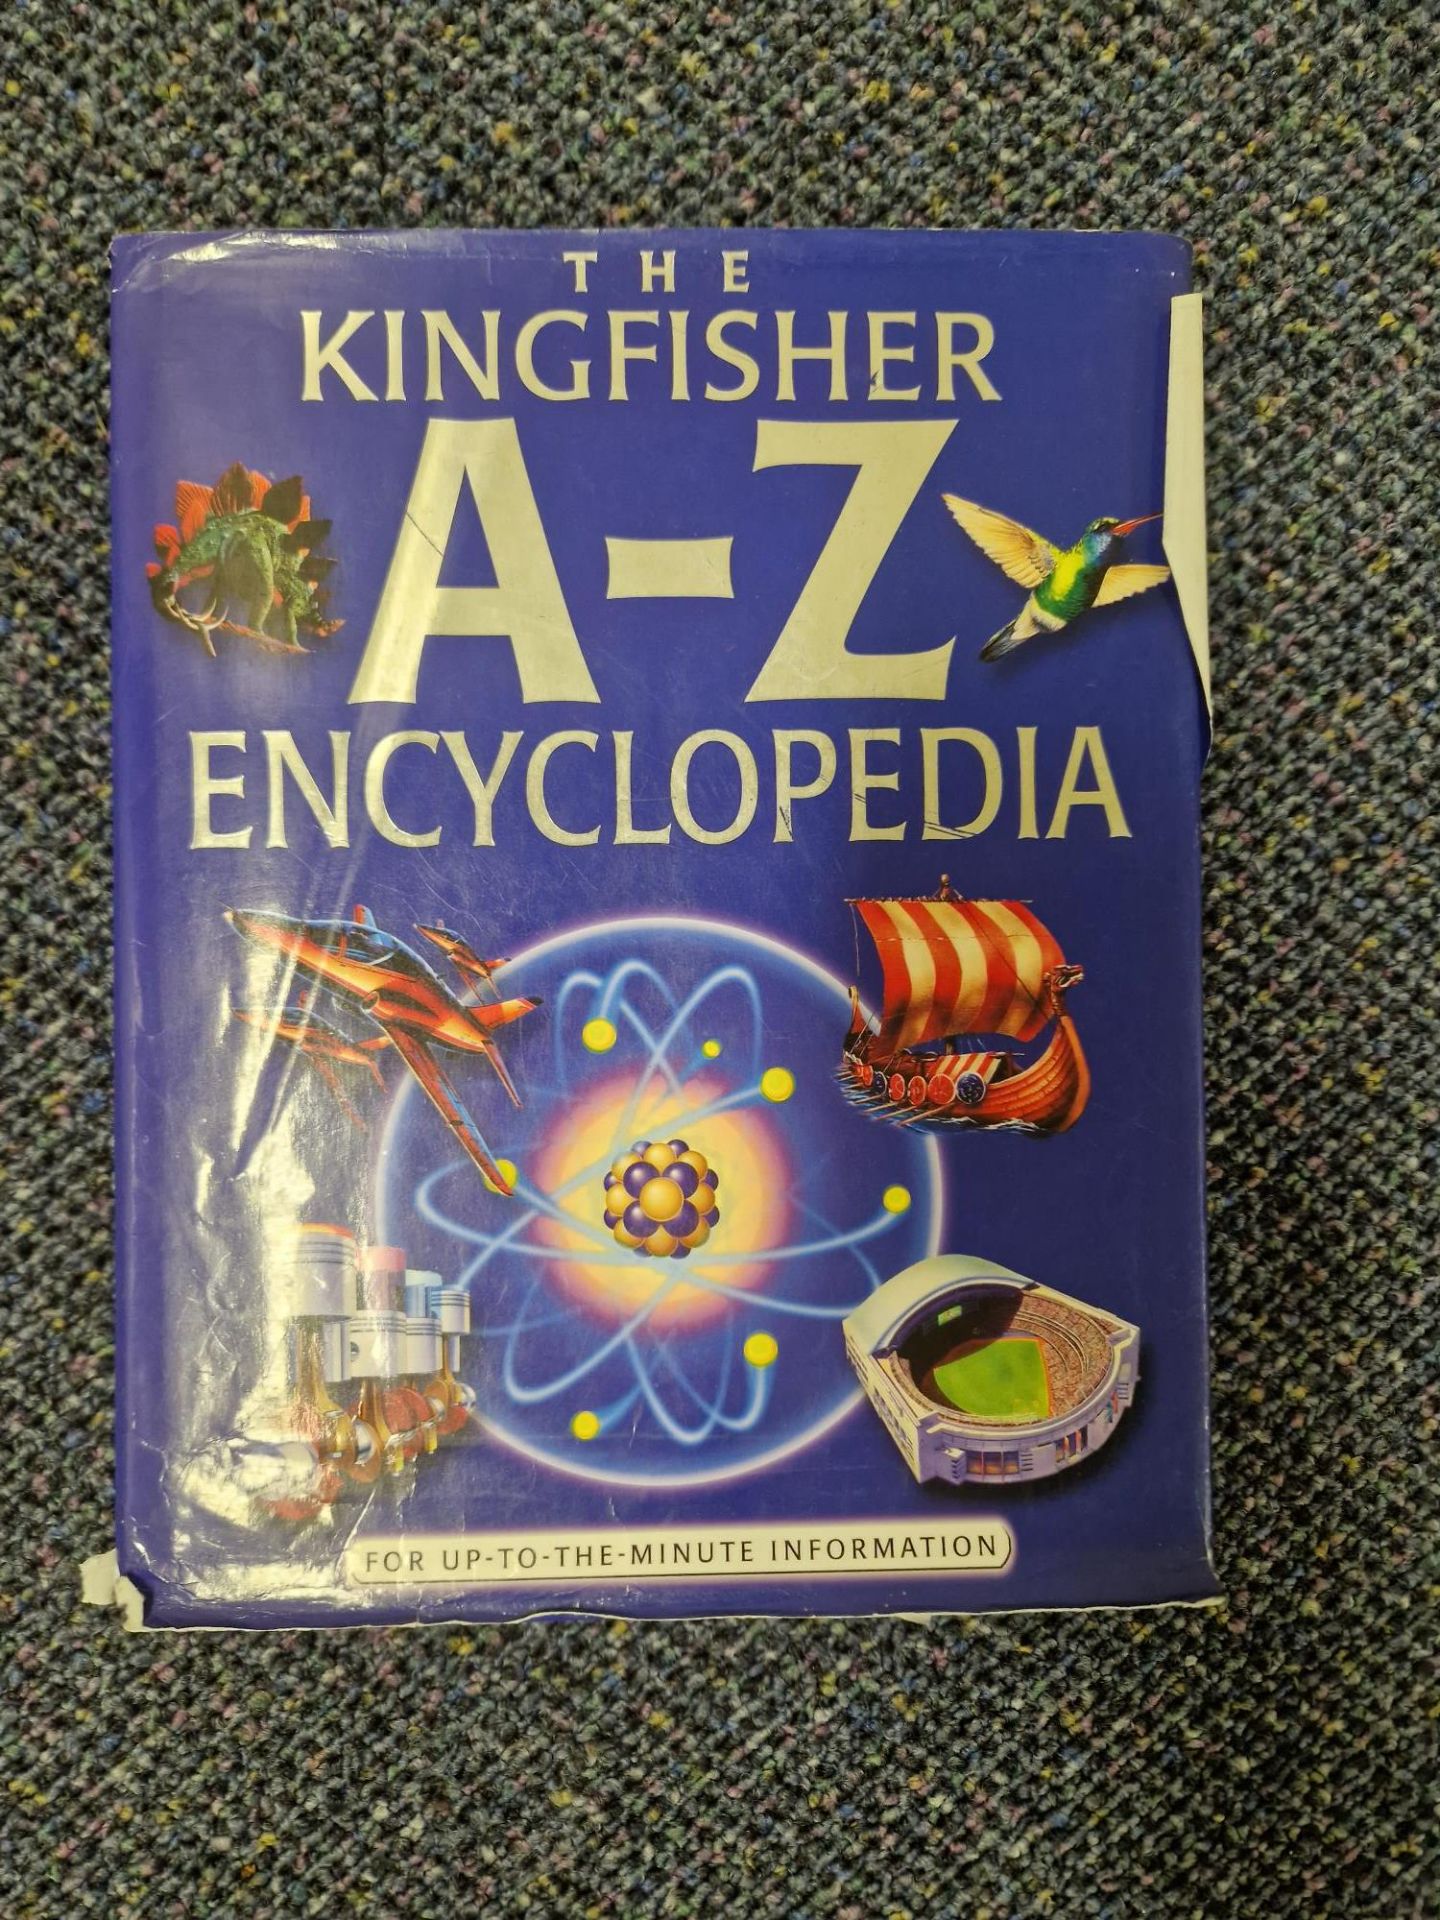 The kingfisher a-z encyclopedia